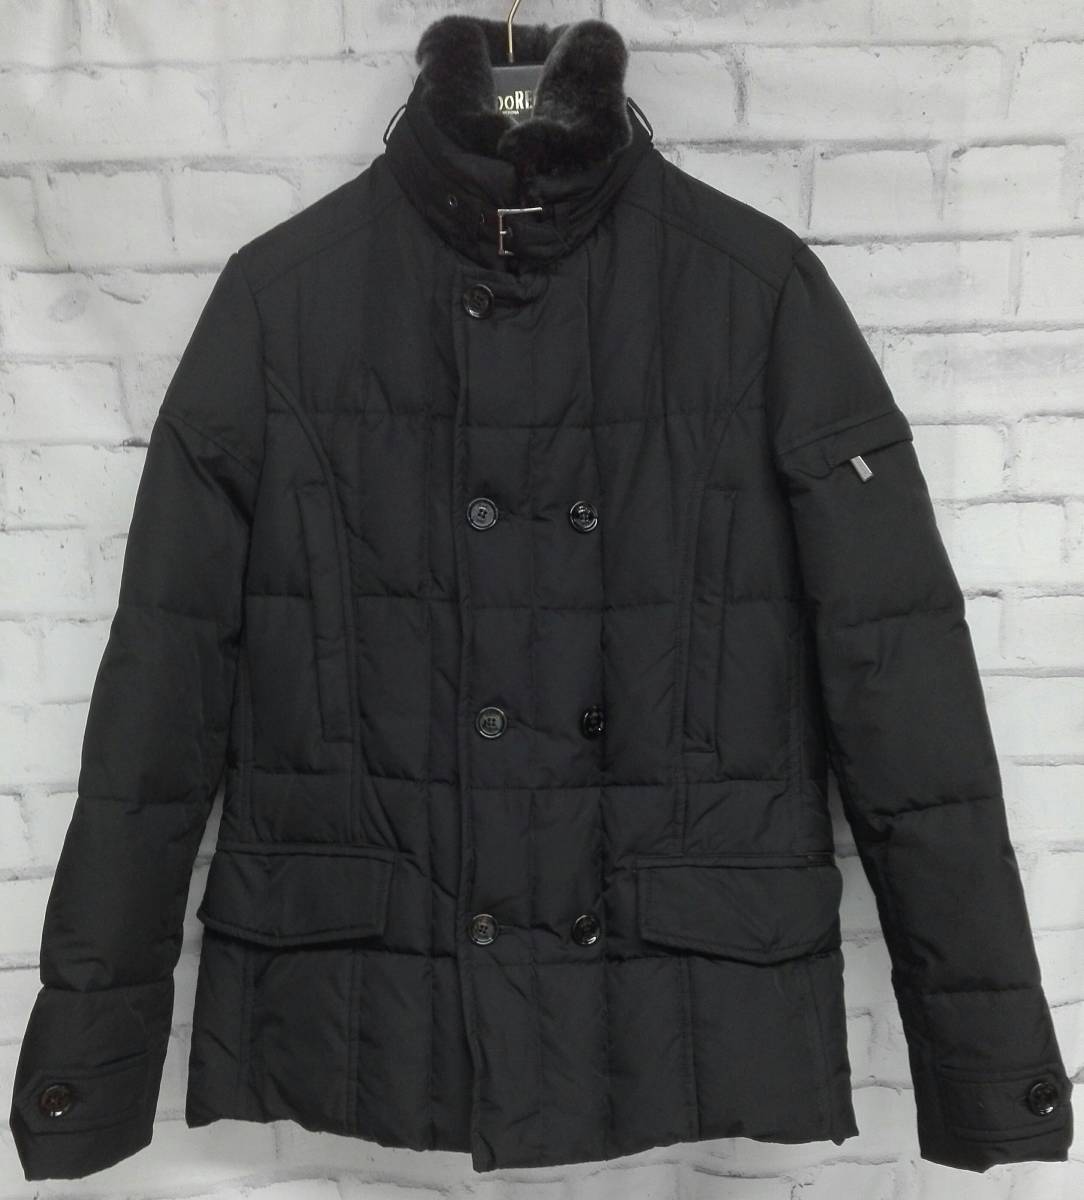 MooRER ムーレー SIRO KM ダウンジャケット シーロ サイズ46 ブラック イタリア製 ファー取り外し可能 最高級品質 メンズ 冬